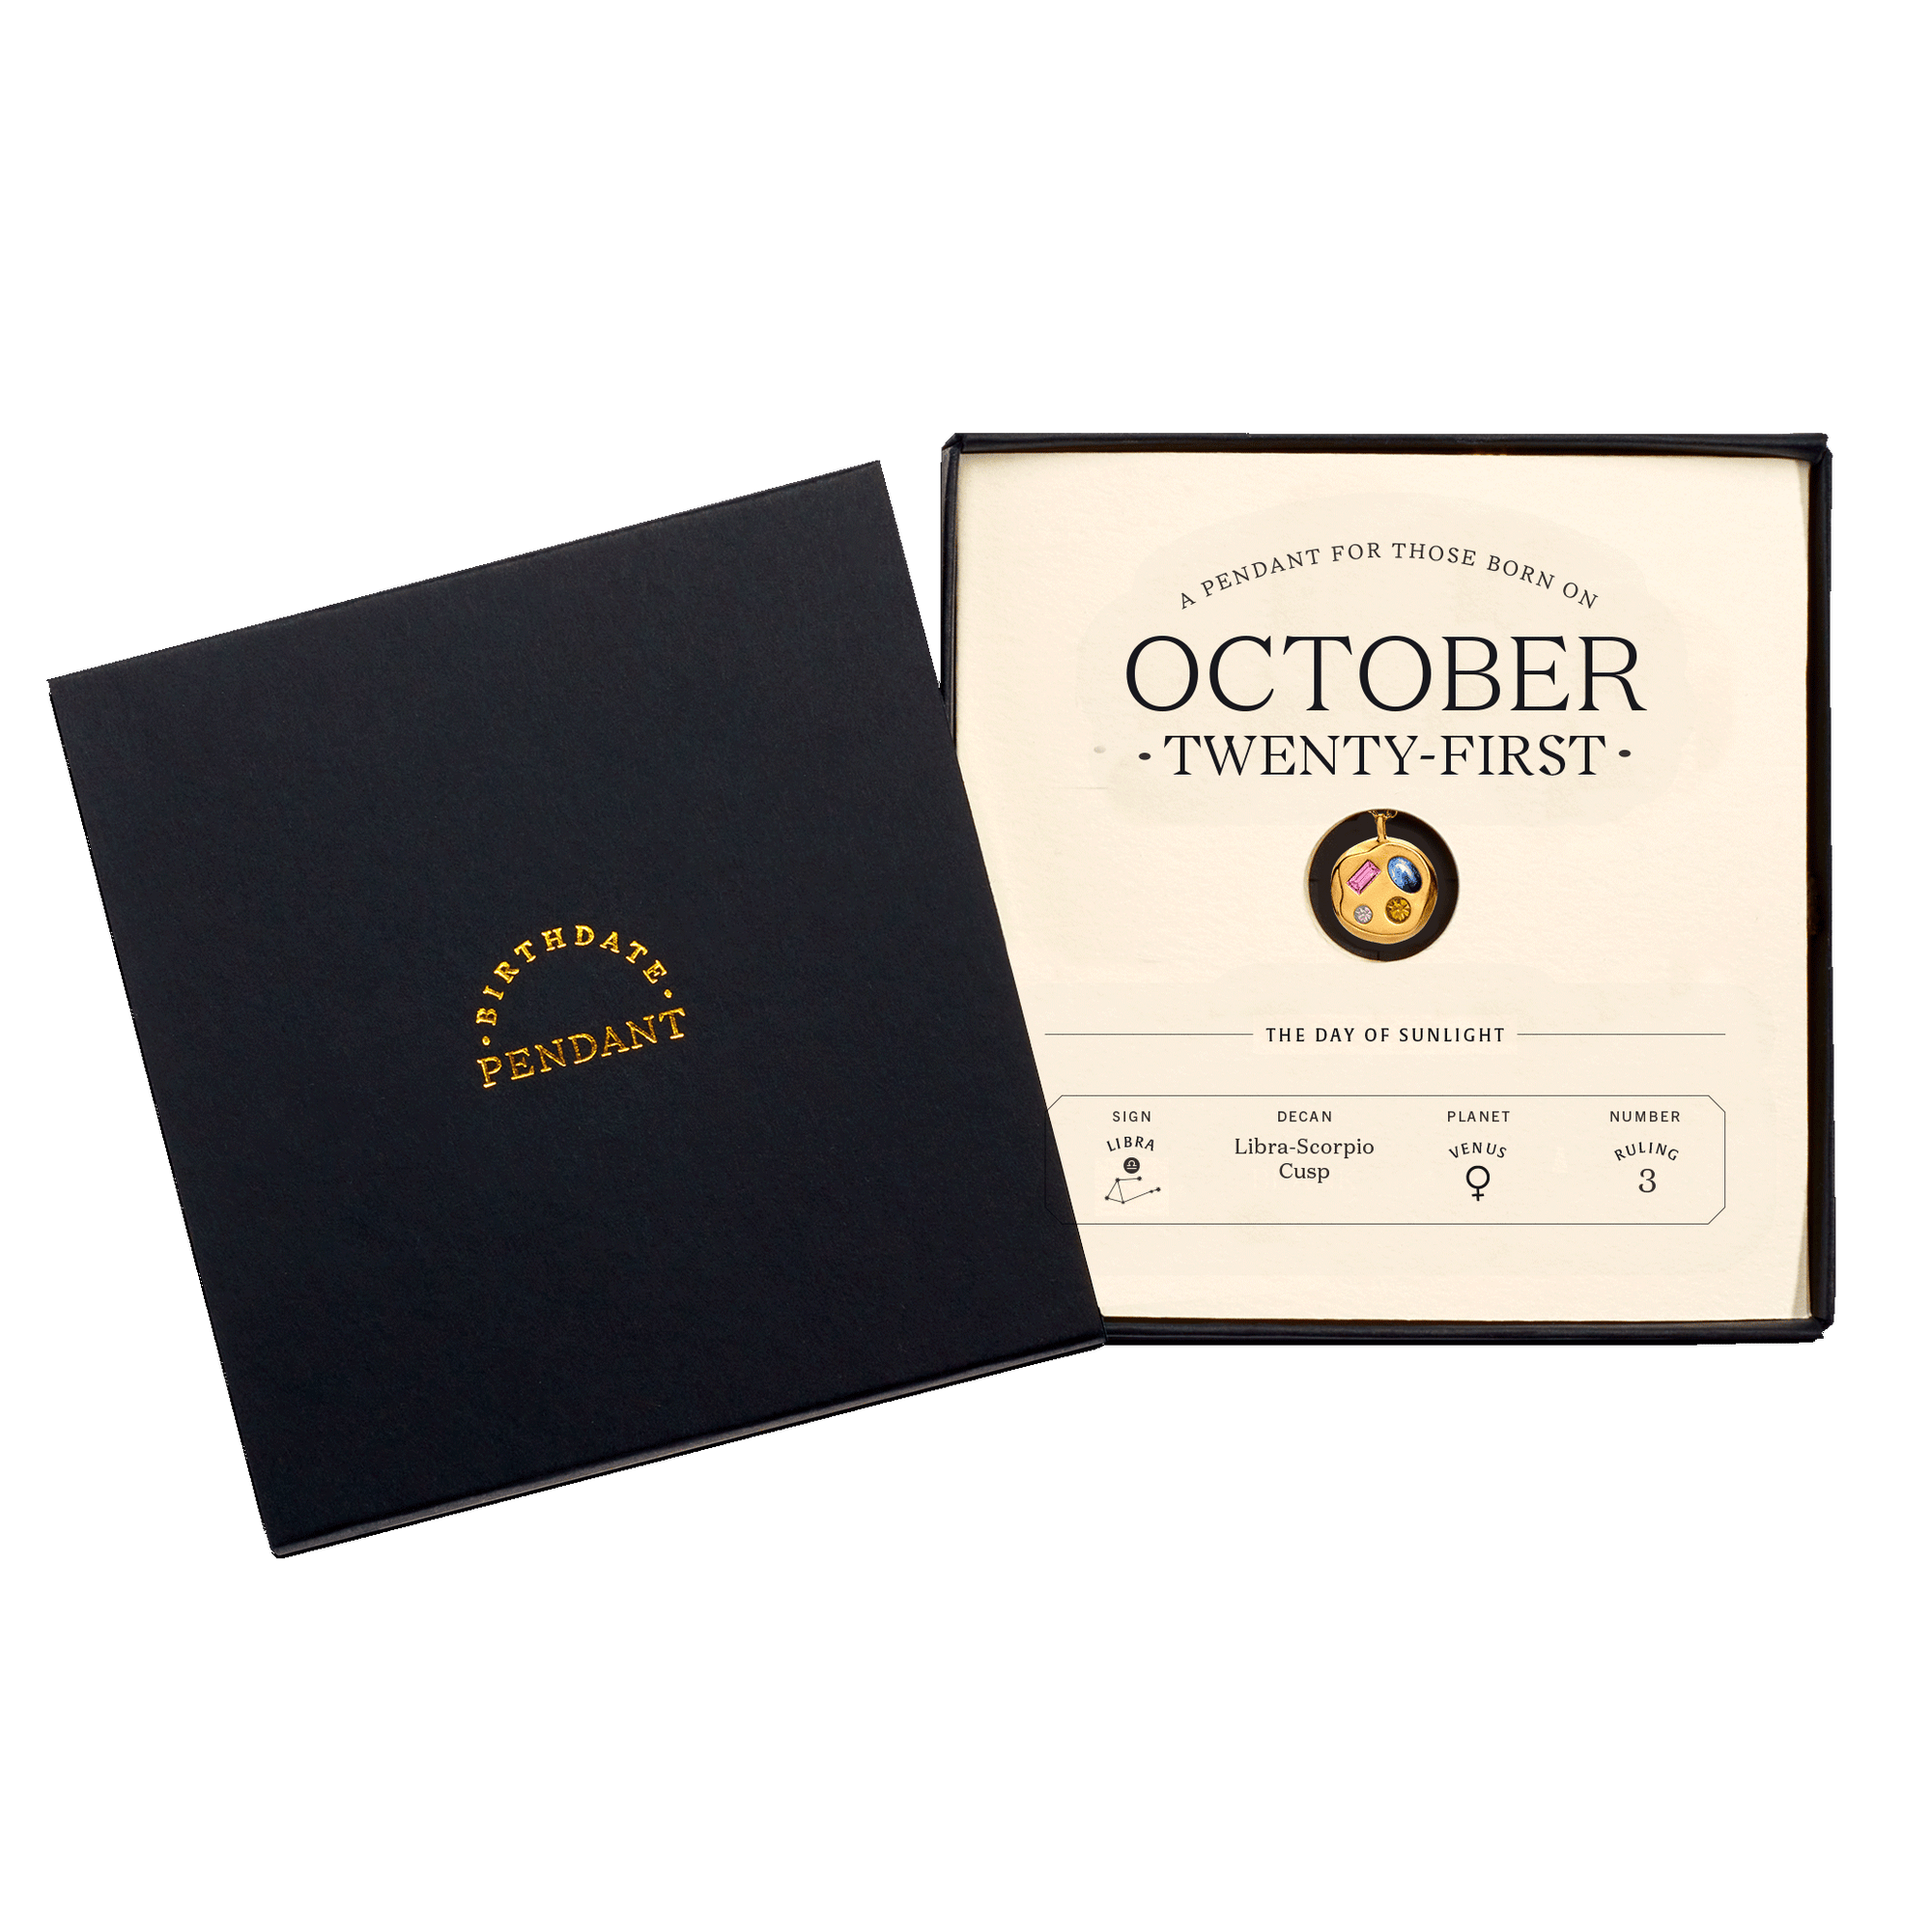 The October Twenty-First Pendant inside its box